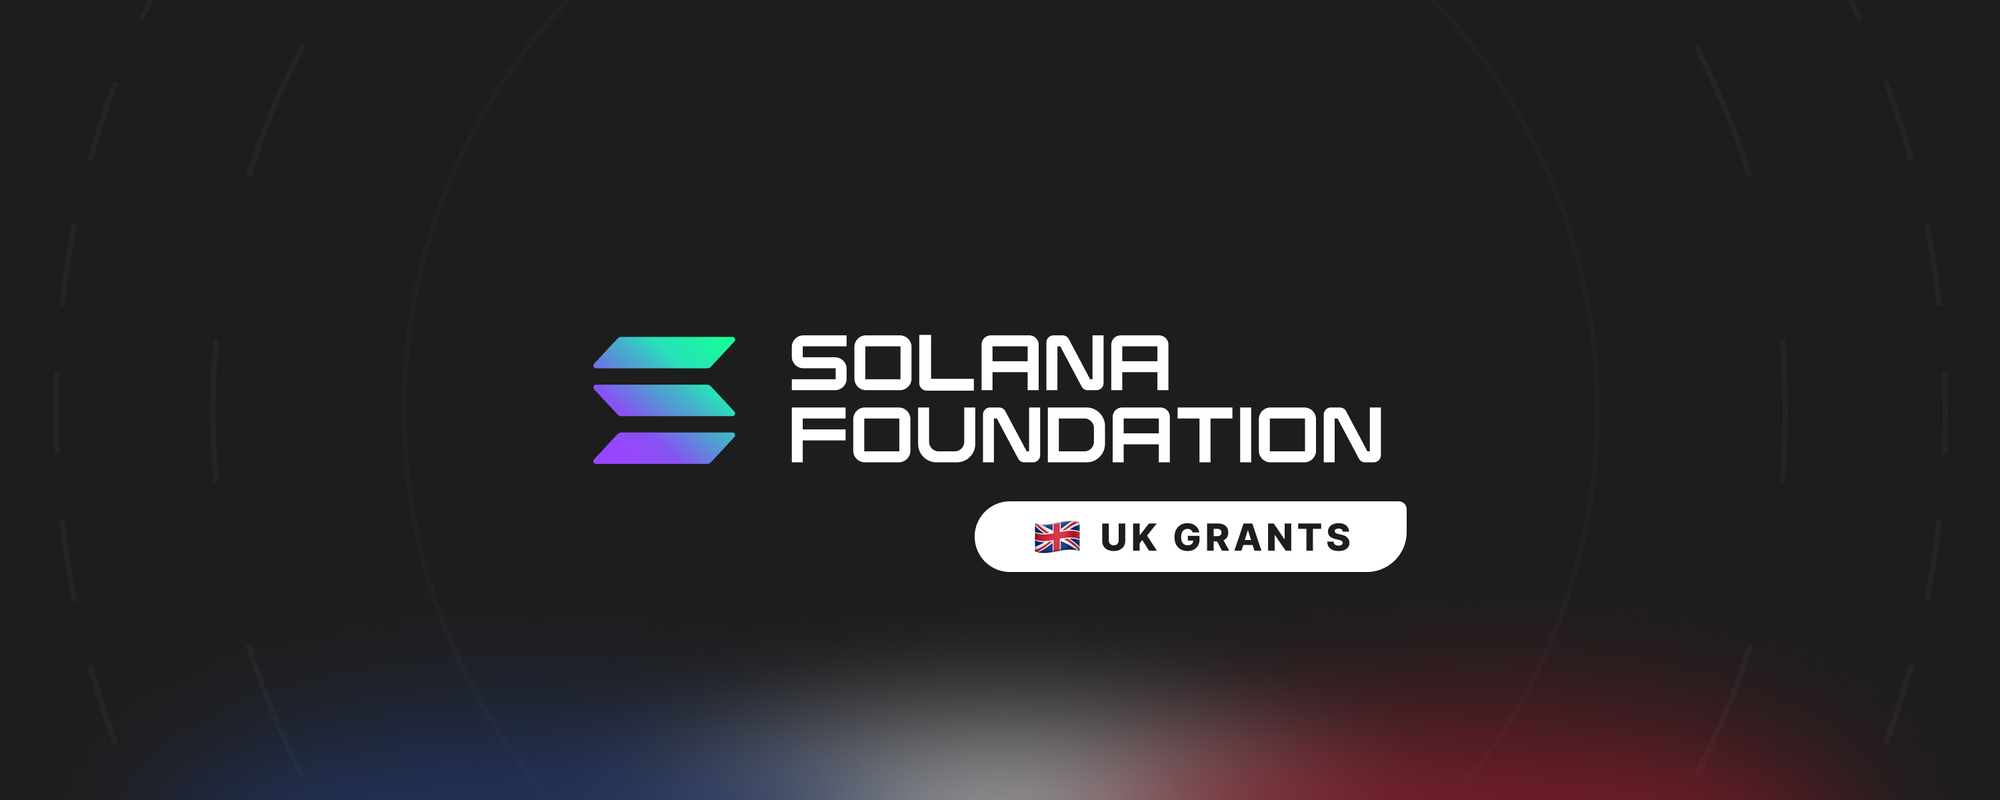 Solana Foundation UK Grants